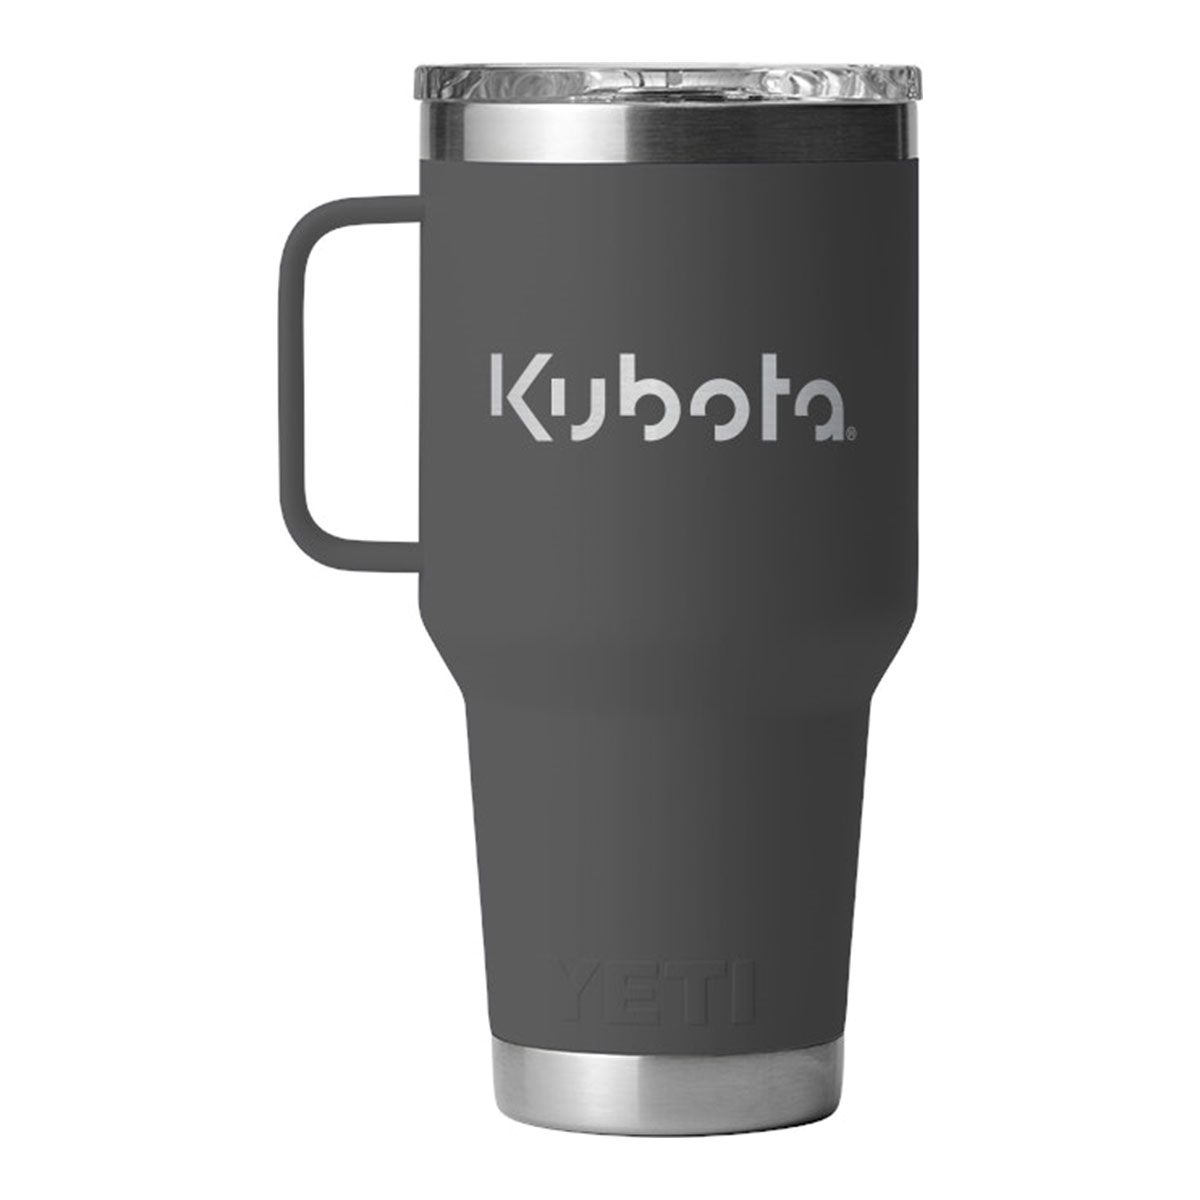 YETI CA Tumblers: Reusable Mugs And Cups